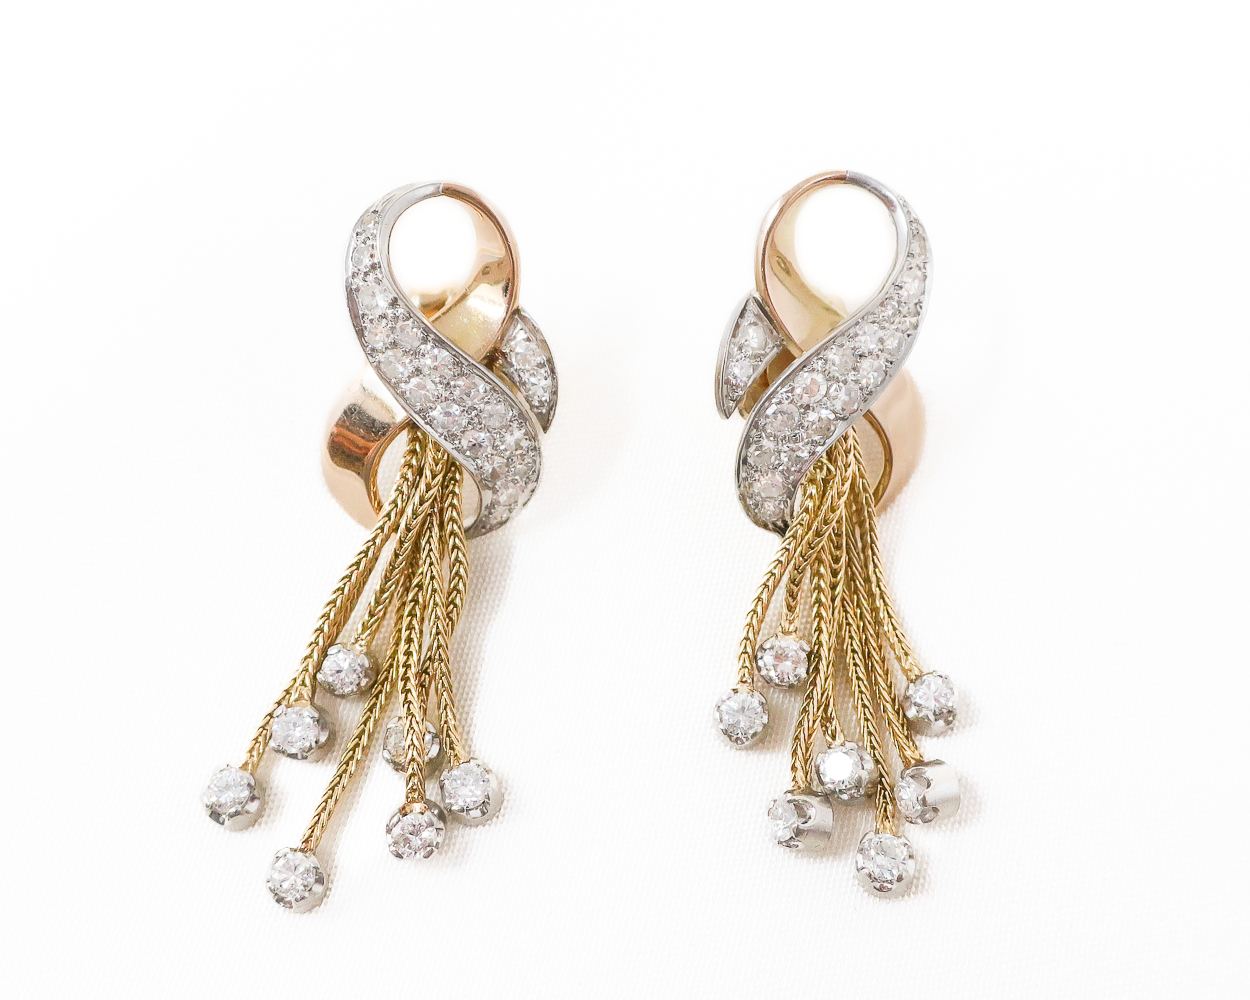 Midcentury Diamond Earrings with Gold Tassels